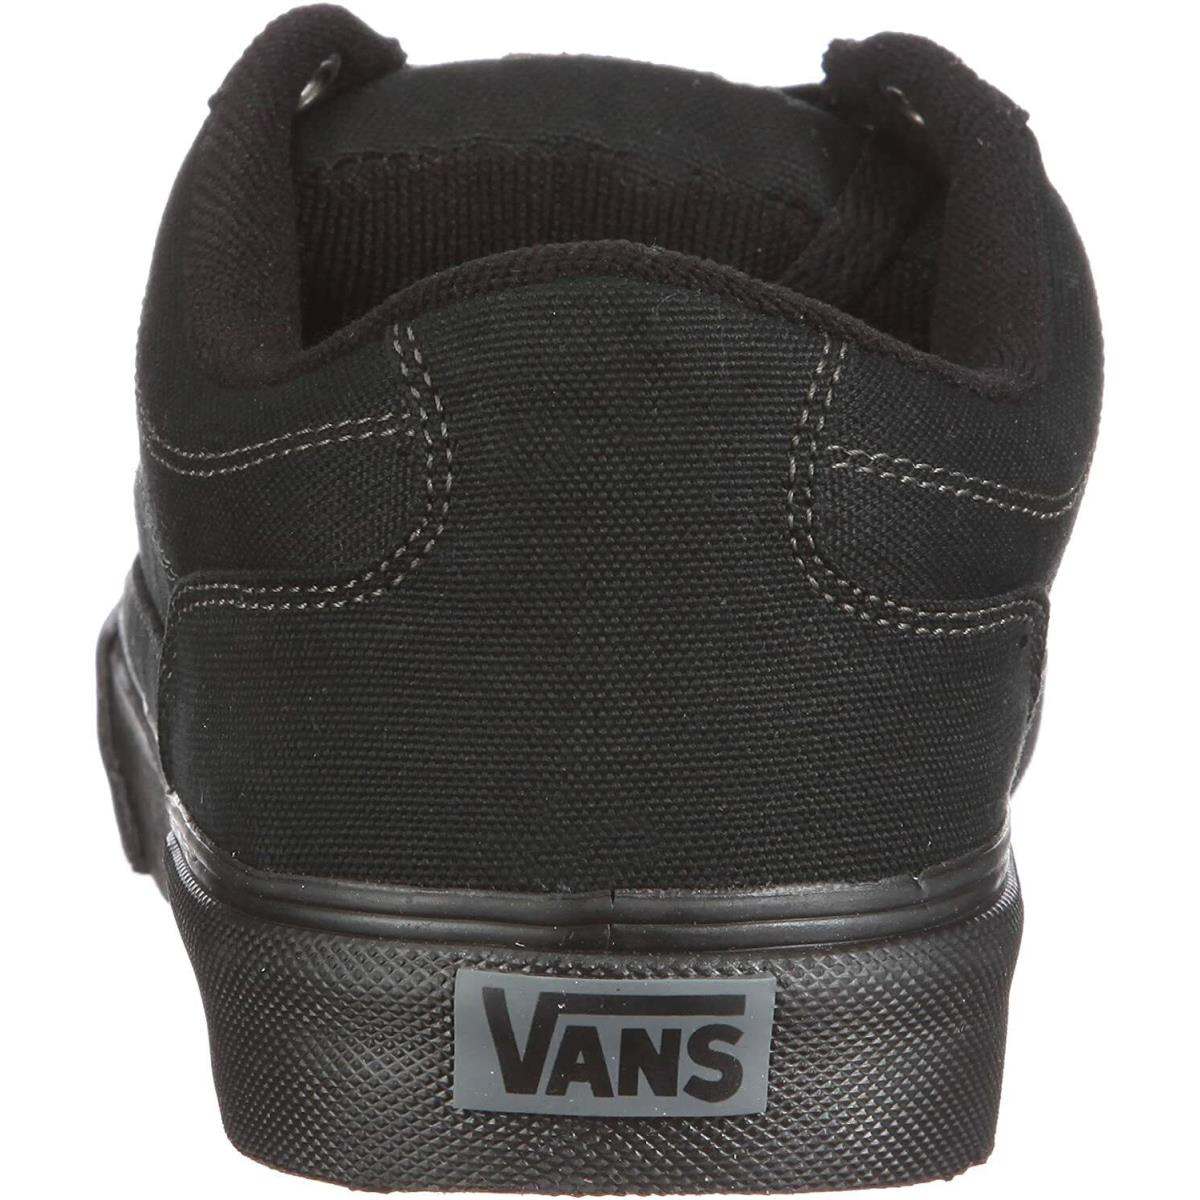 Vans shoes Bearcat - Black 1